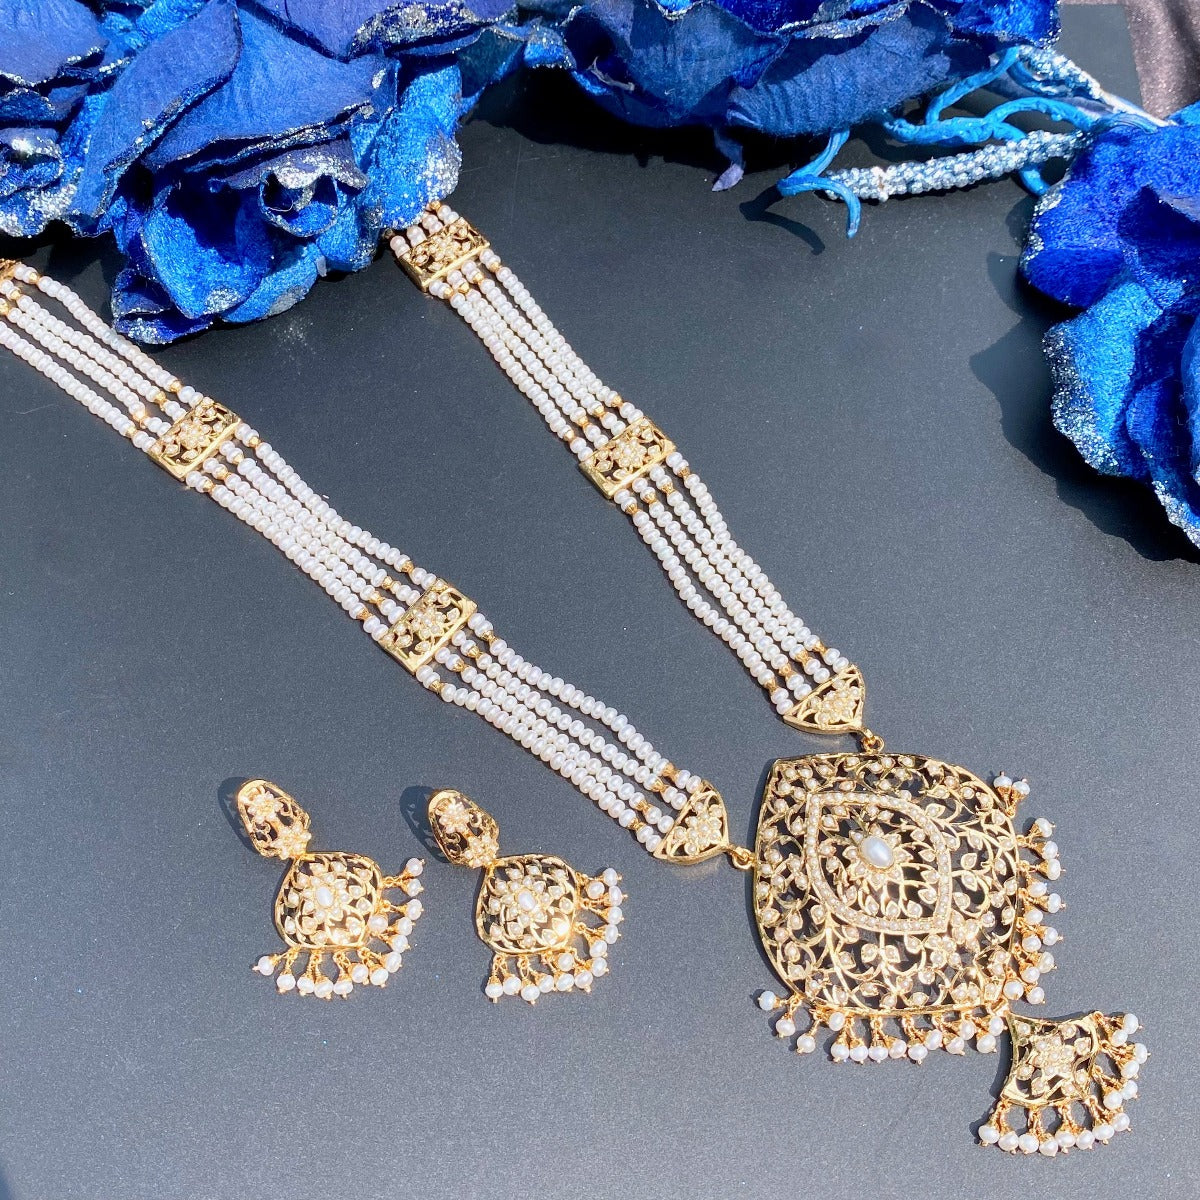 amritsar jadau jewelry in silver